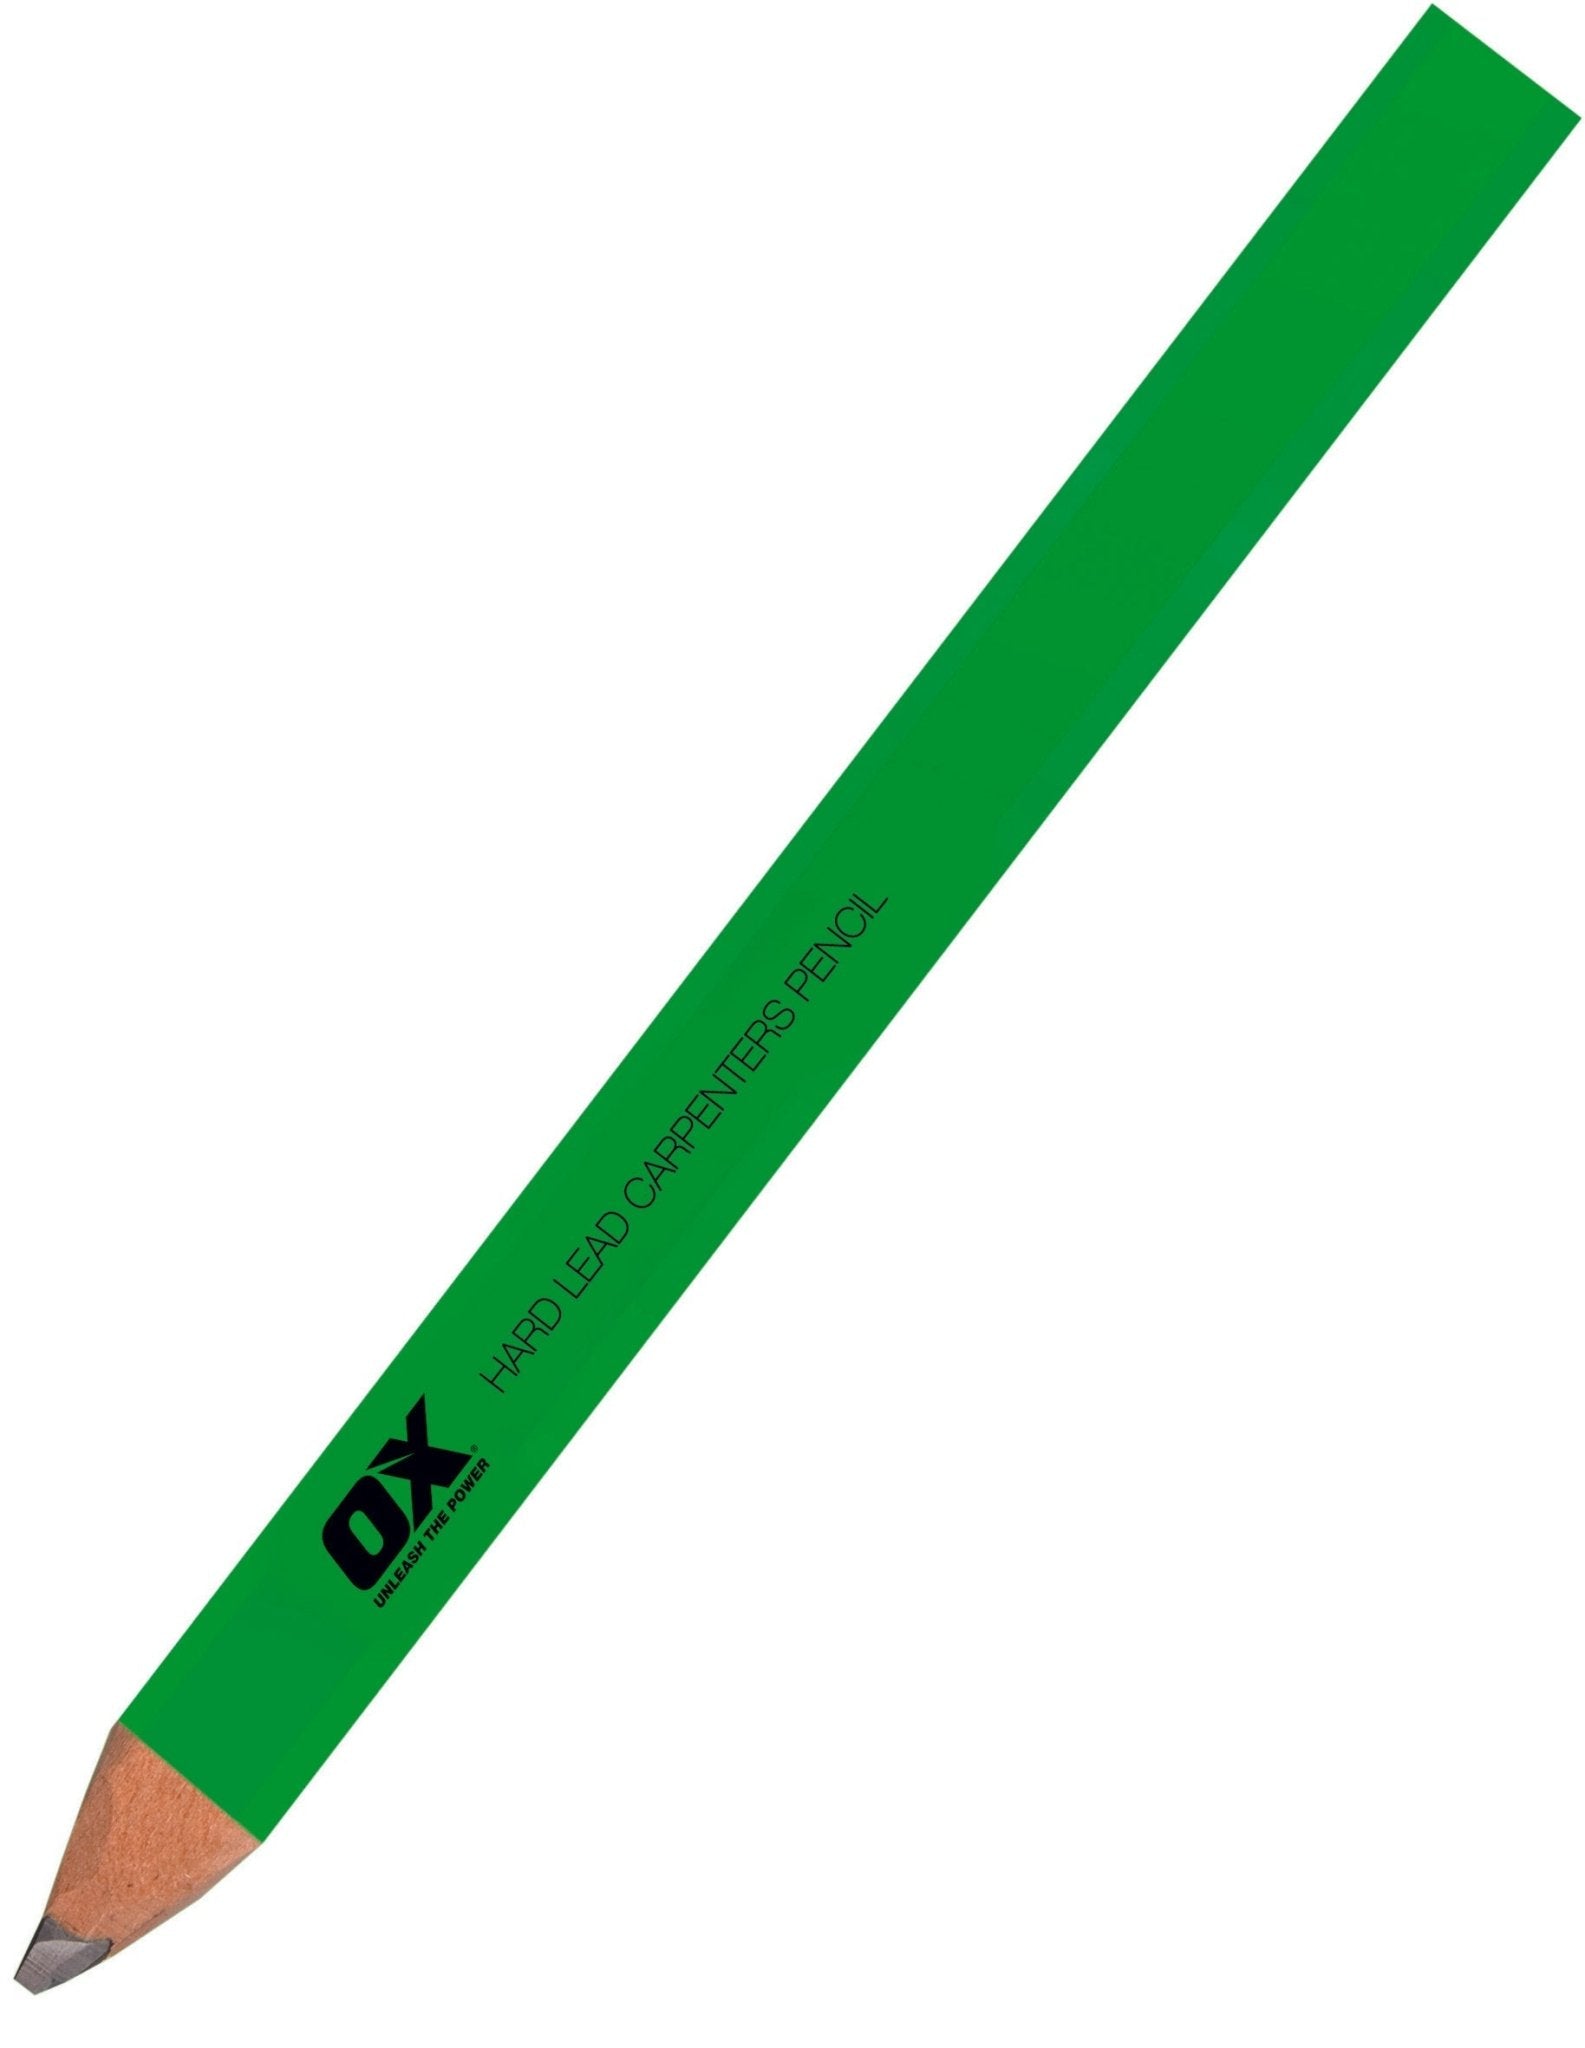 OX Trade Hard Green Carpenters Pencils 10 pk (OX-T023010) - Amaroc - Render & Drylining Supplies